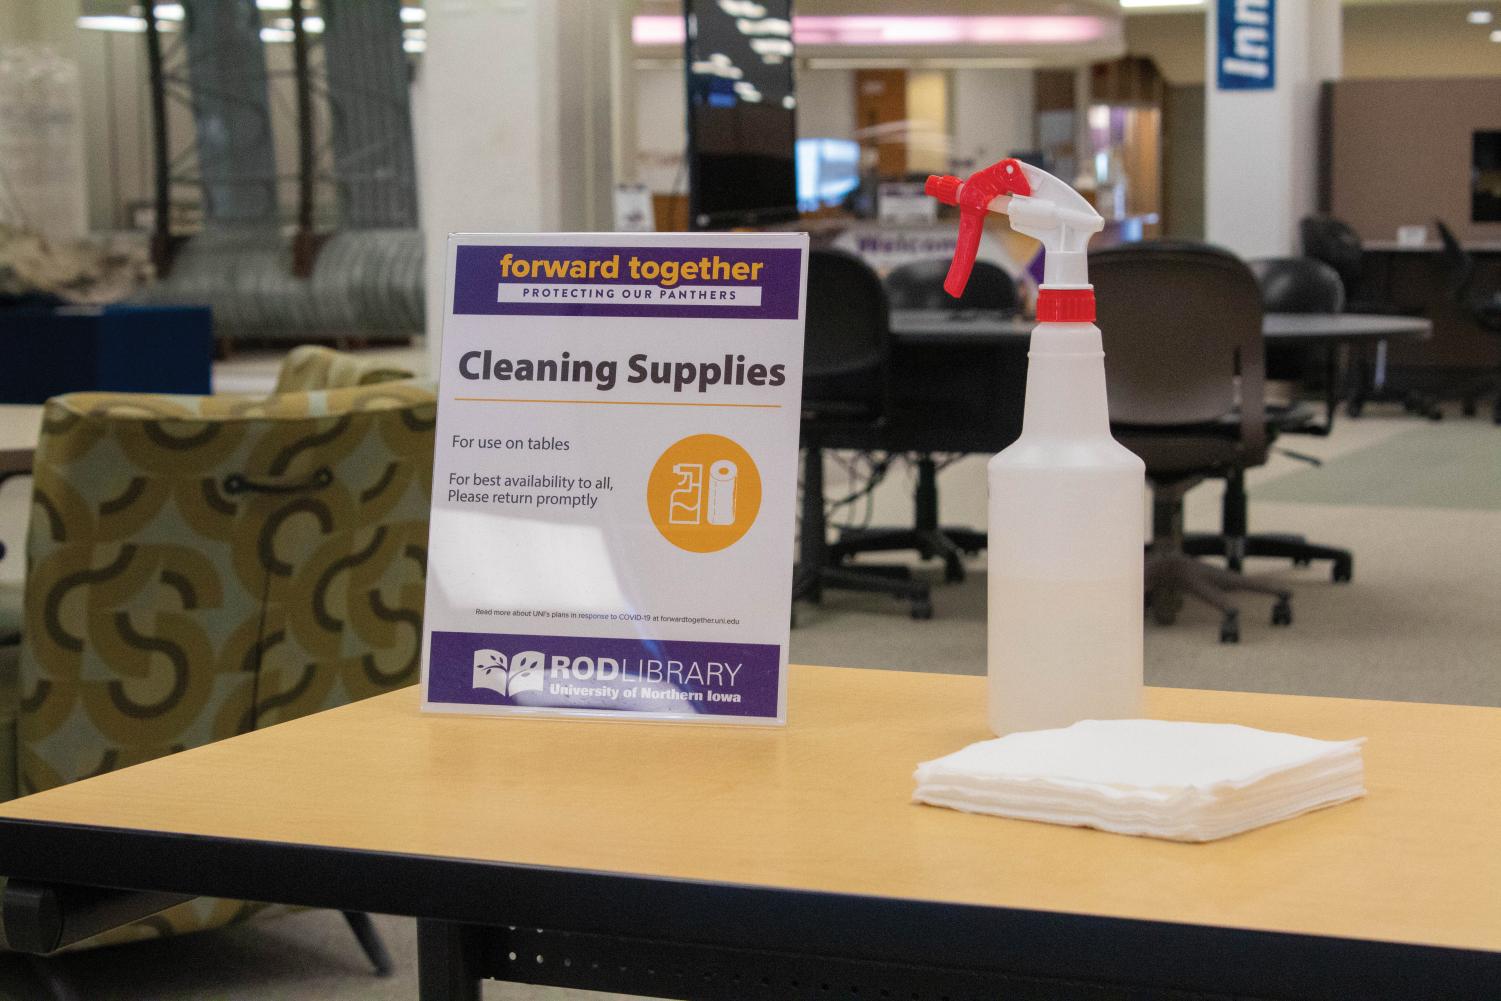 New+procedures+keep+campus+clean